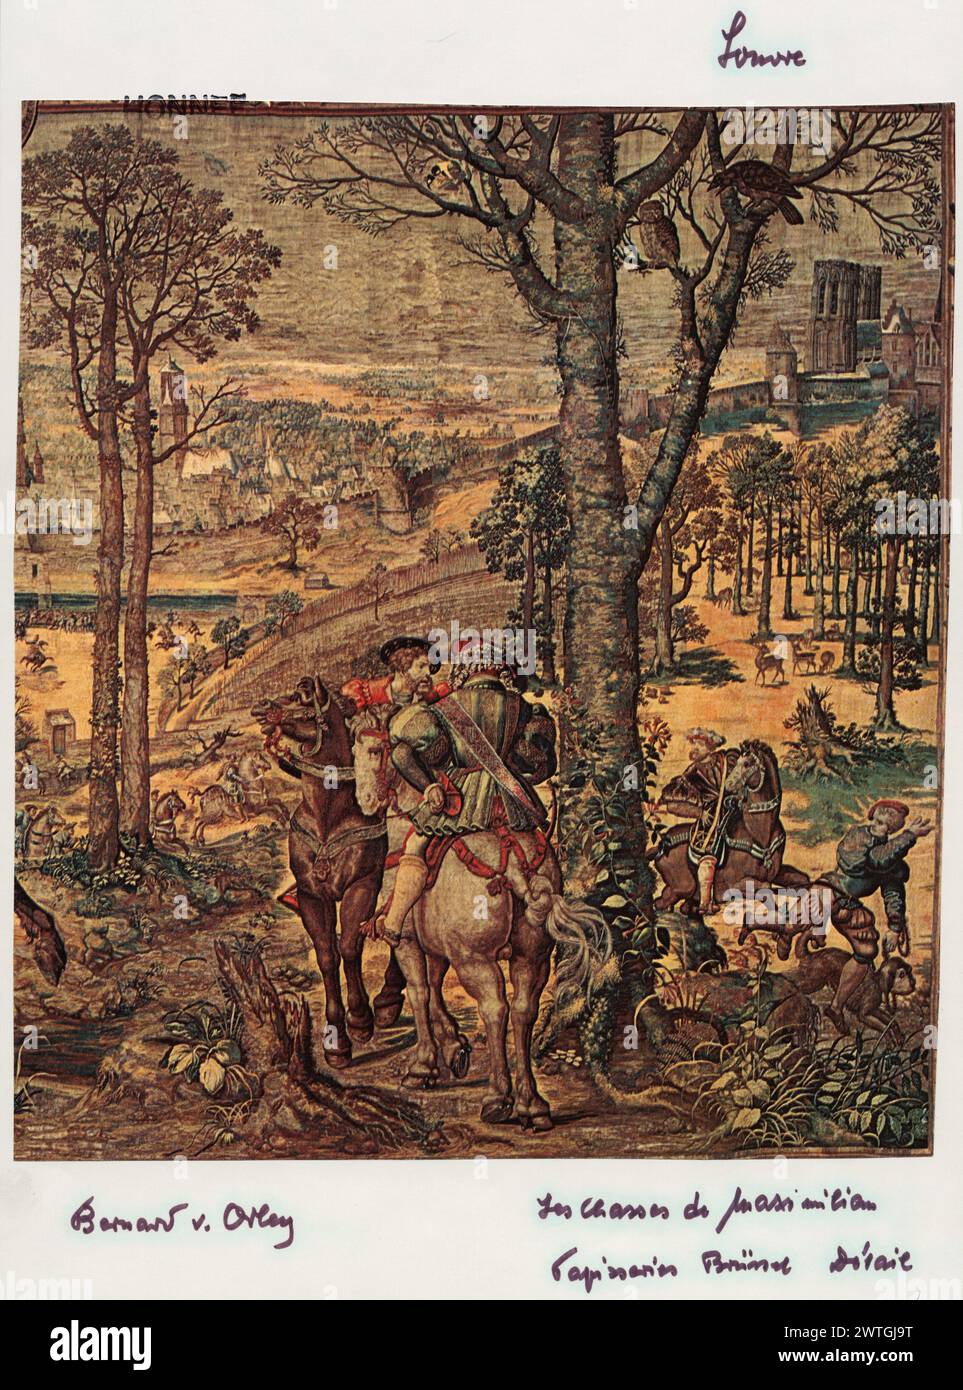 März/Aries, Abfahrt zur Endjagd. Orley, Bernart van (Niederländisch (vor 1600) - Flandern, ca. 1492-1542) (Autor des Designs) [Zeichner] Tonnen, Jan (der ältere) (Niederländisch (vor 1600) - Flandern, ACT.1529/30) (Autor des Designs, Landschaft) [Maler] Moy, Willem (Niederländisch (vor 1600) - Flandern, ACT. CA.1525) (Werkstatt) [Weber] ca. 1530-1535 Gobelin Abmessungen: H 4,40 x B 7,50 m Gobelin Materialien/Techniken: Wolle; Seide; Metallfäden (Gold); Metallfäden (Silber) Kultur: Flämisches Weberzentrum: Brüsseler Besitz Geschichte: Inventar des Duc de Guise (1589). Ludwig XIV. (163 Stockfoto